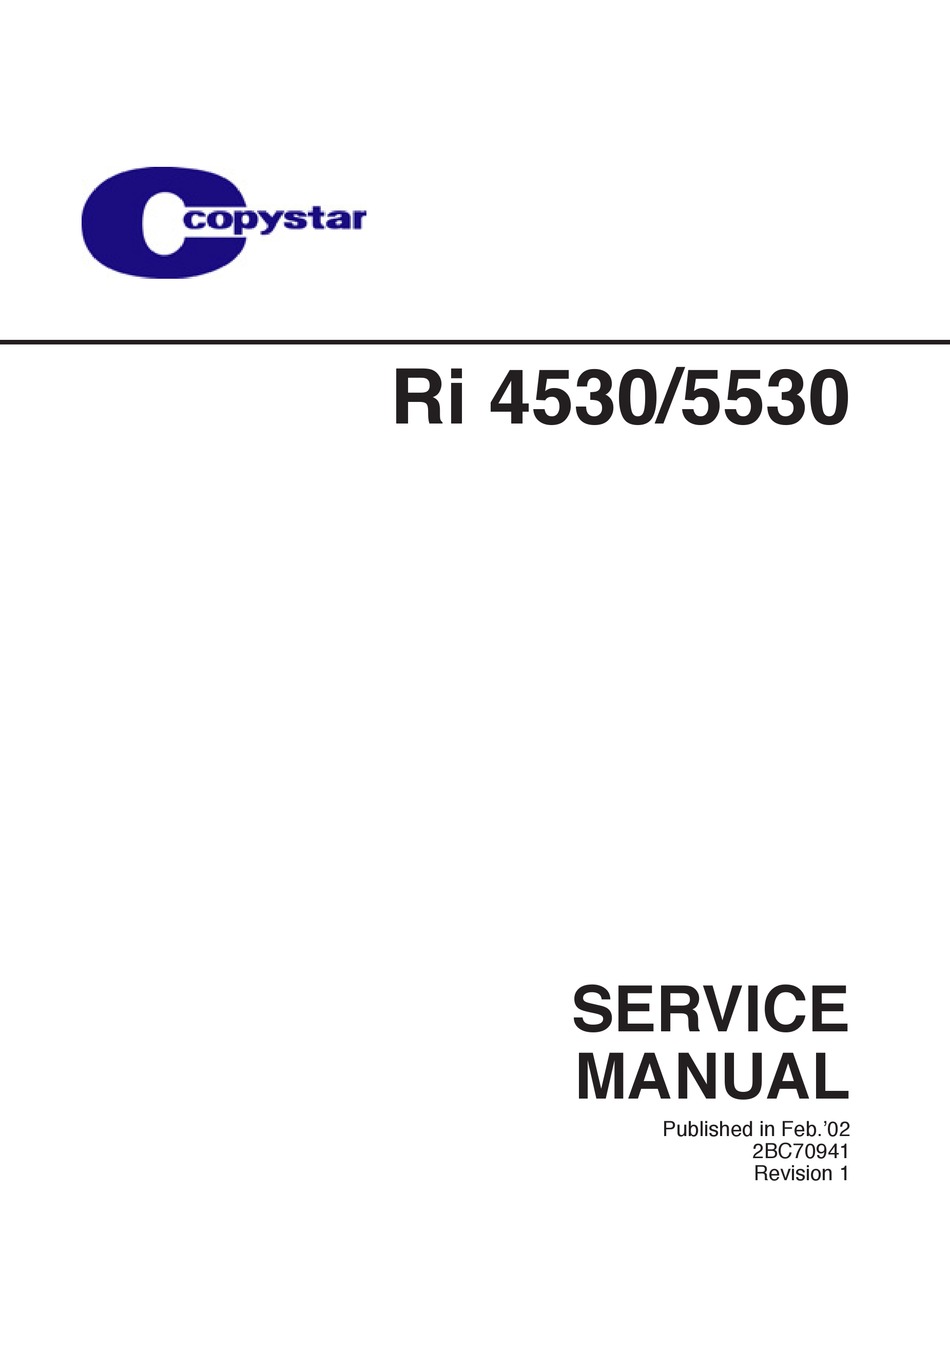 kyocera-ri-4530-copystar-service-manual-pdf-download-manualslib